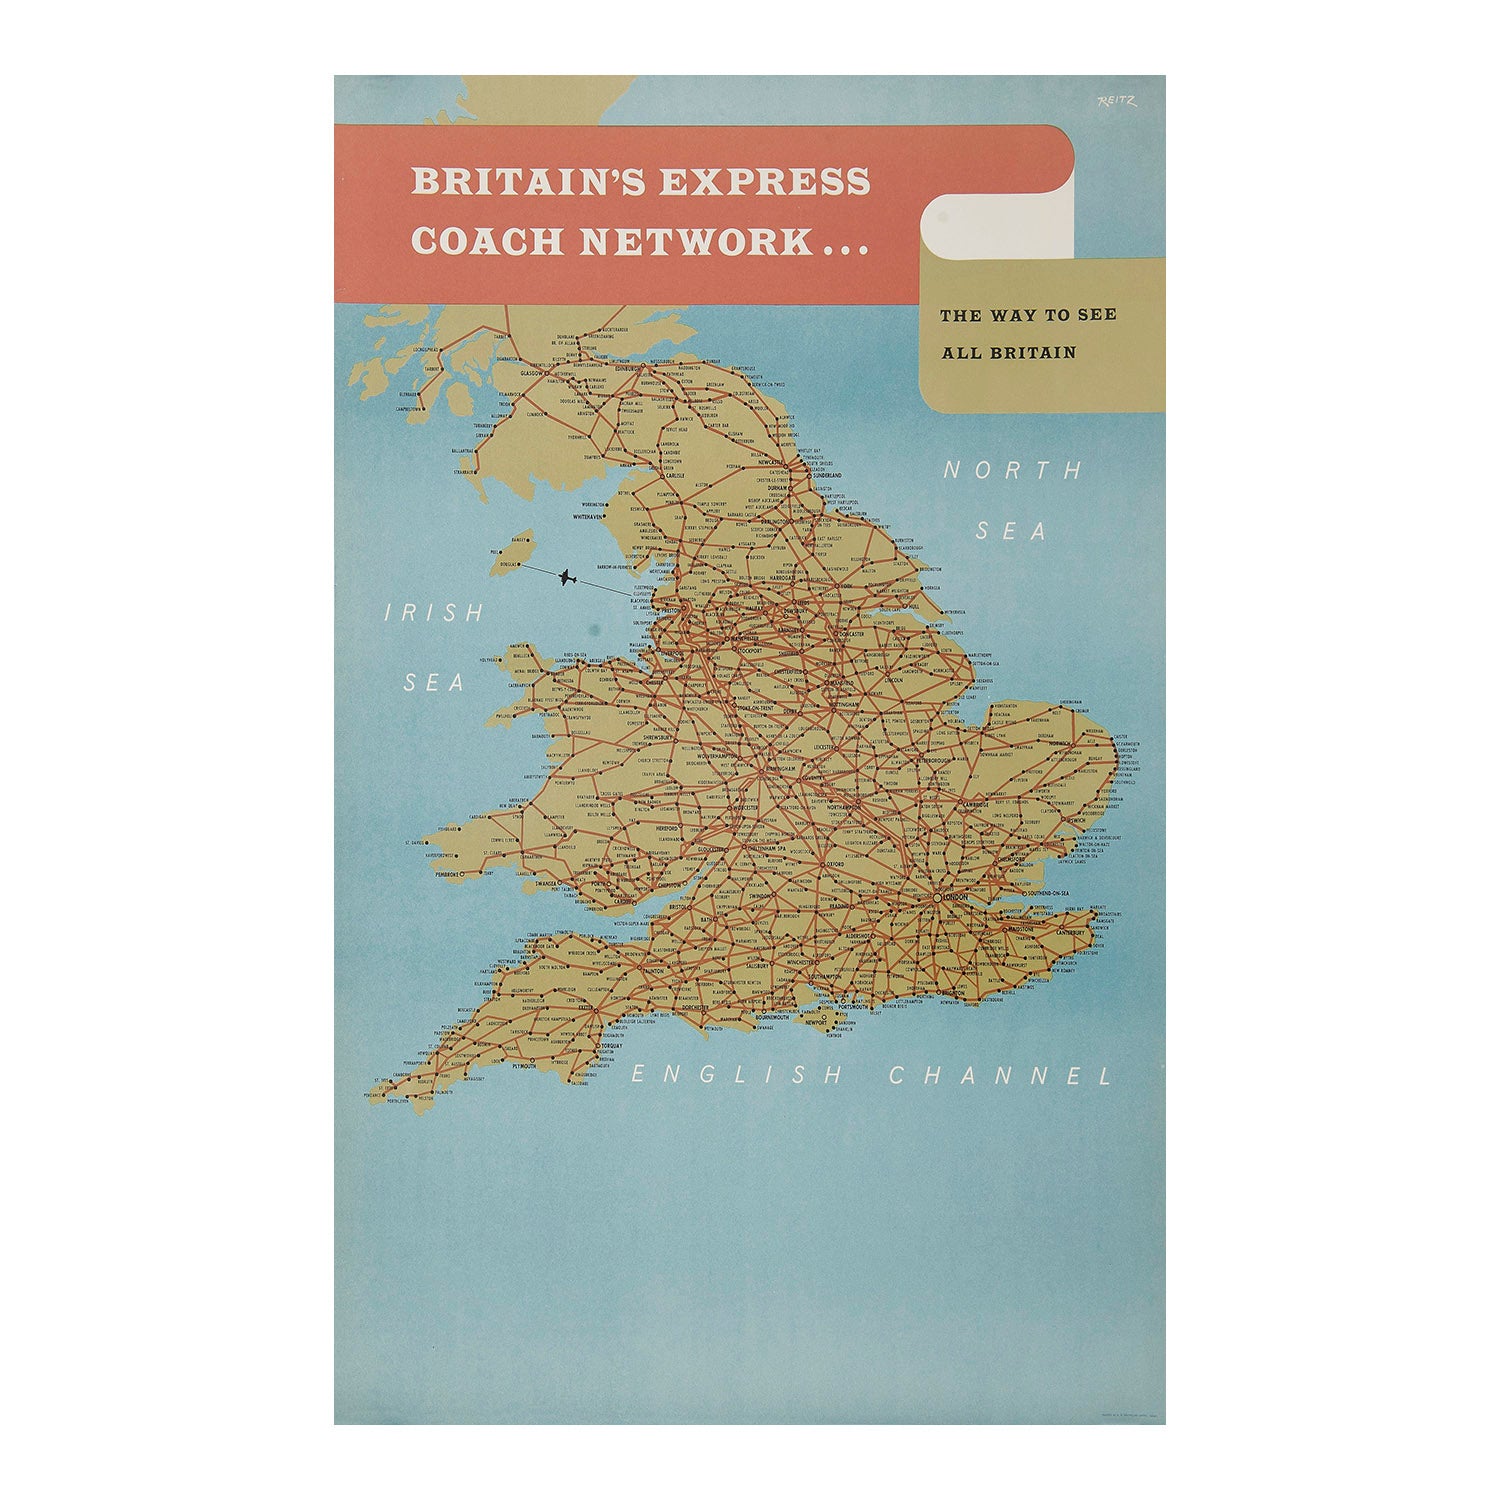 Britain's Express Coach Network